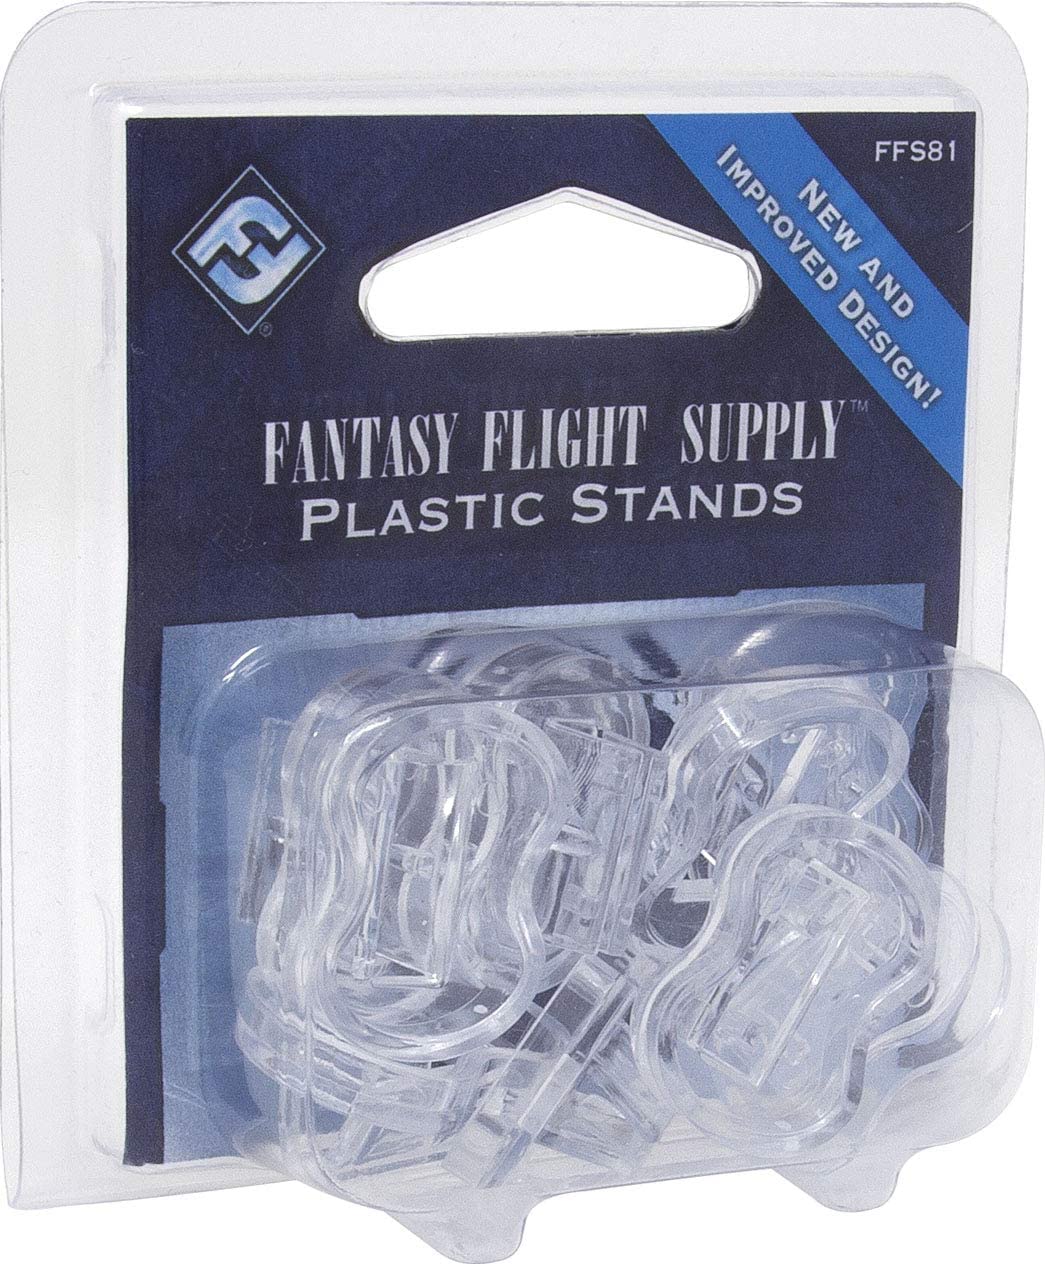 FFG Supply: Plastic Stands FFGFFS81